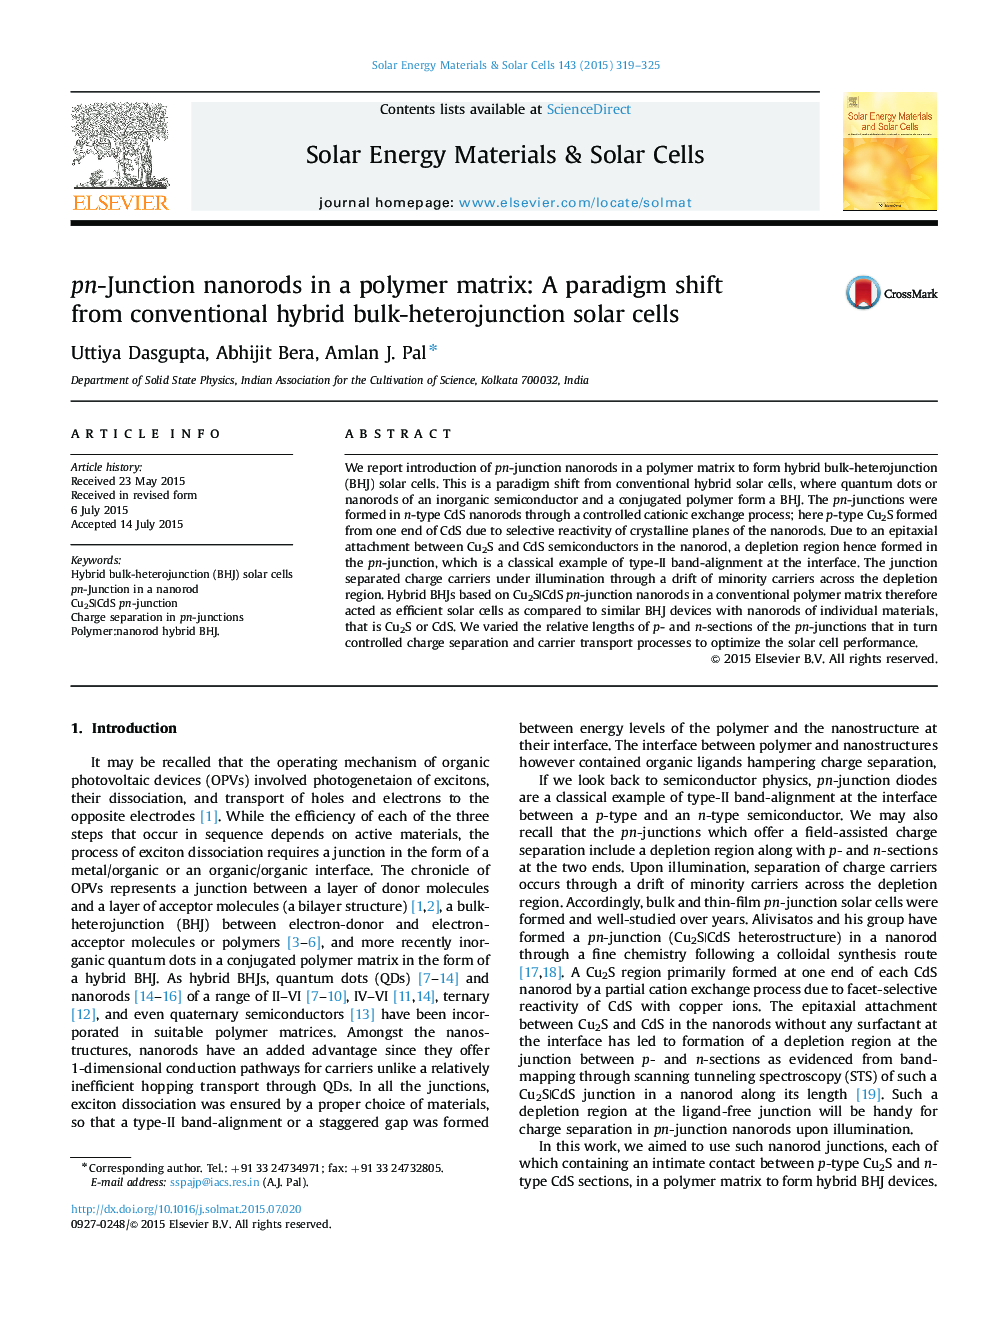 pn-Junction nanorods in a polymer matrix: A paradigm shift from conventional hybrid bulk-heterojunction solar cells